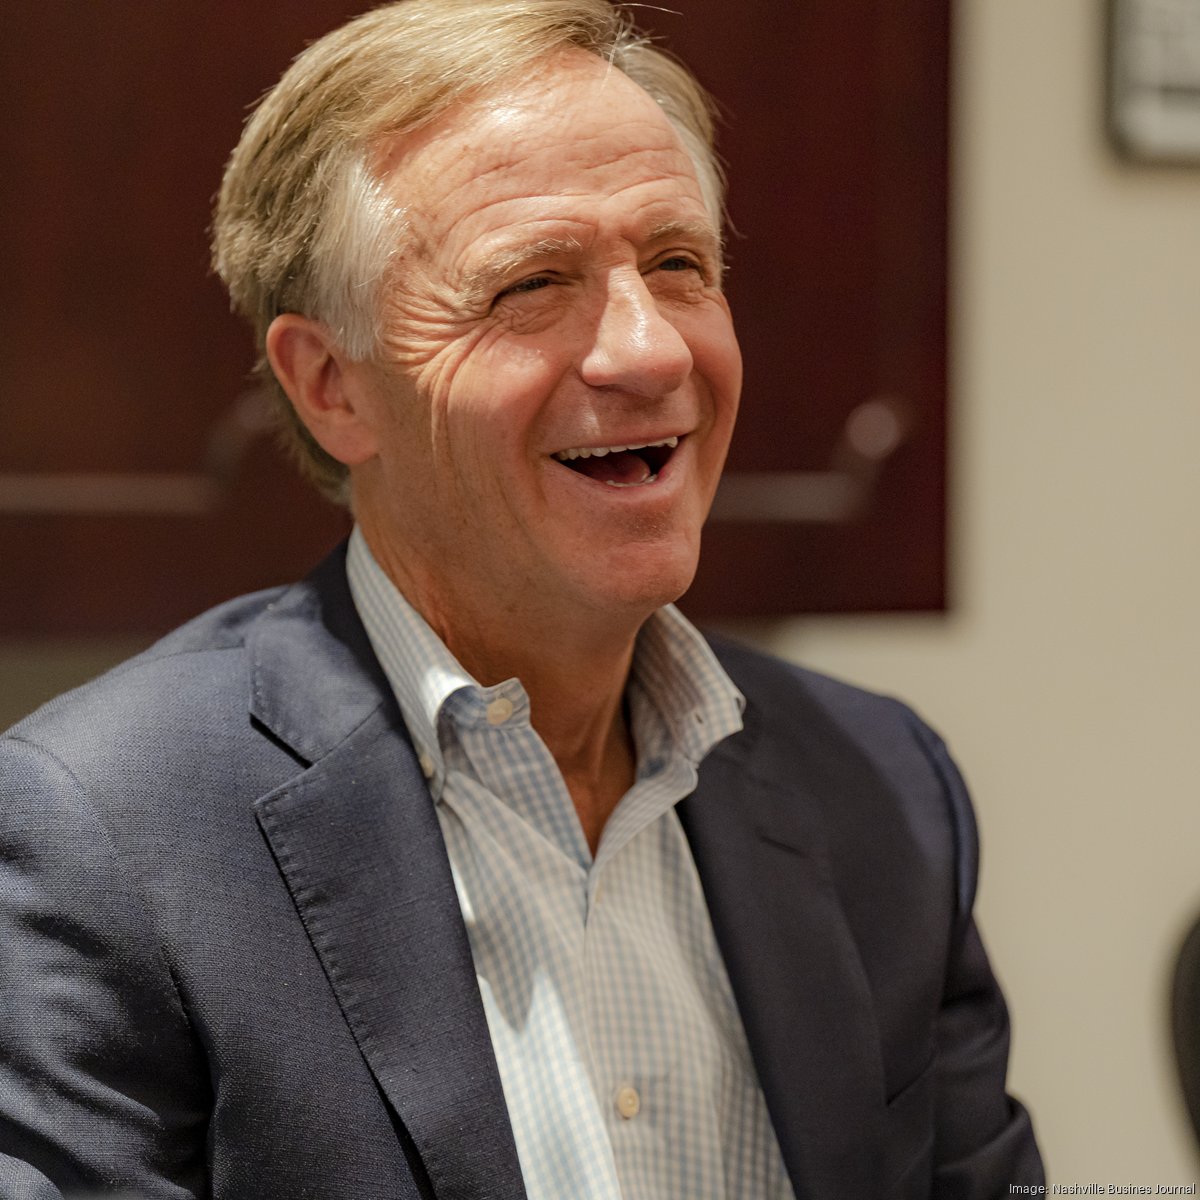 Nashville Predators sale: Former Tennessee Governor Bill Haslam